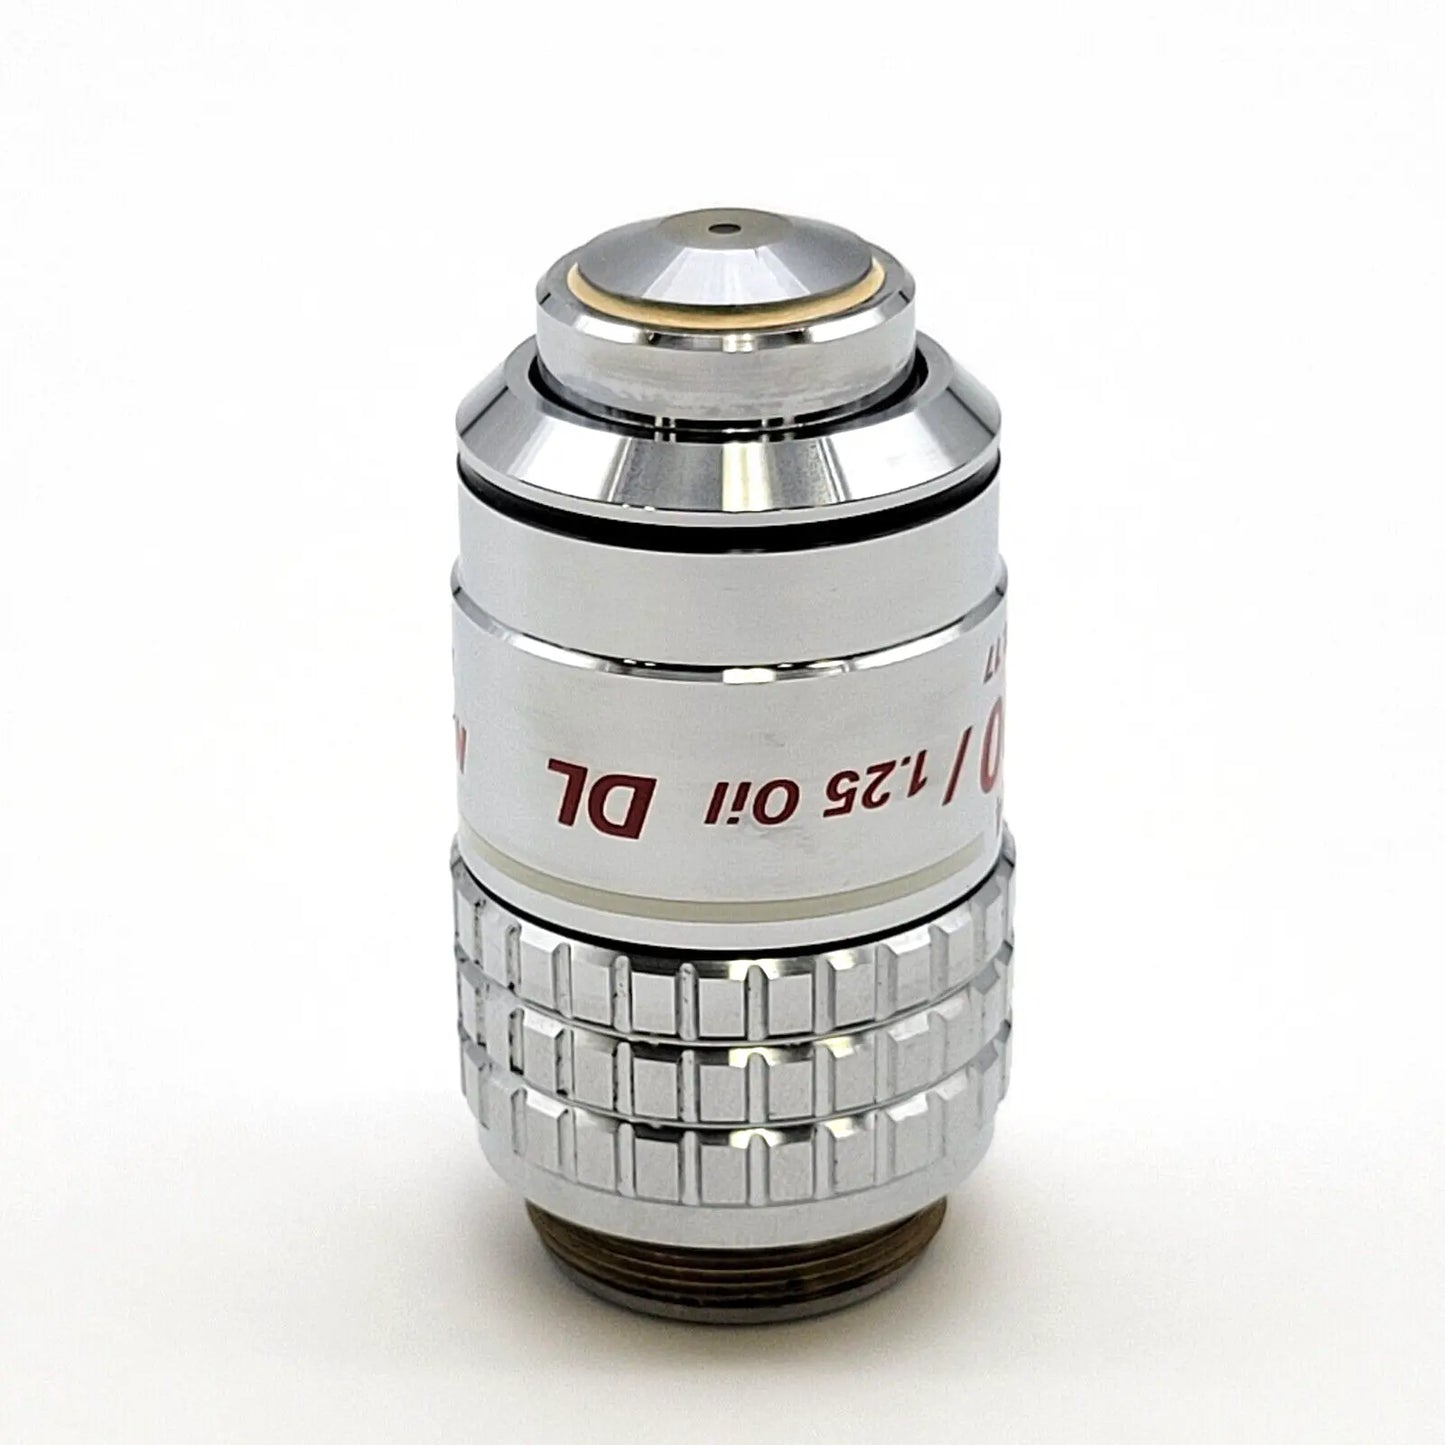 Nikon Microscope Objective Plan 100x 1.25 Oil DL Ph4 160/0.17 Phase Contrast - microscopemarketplace